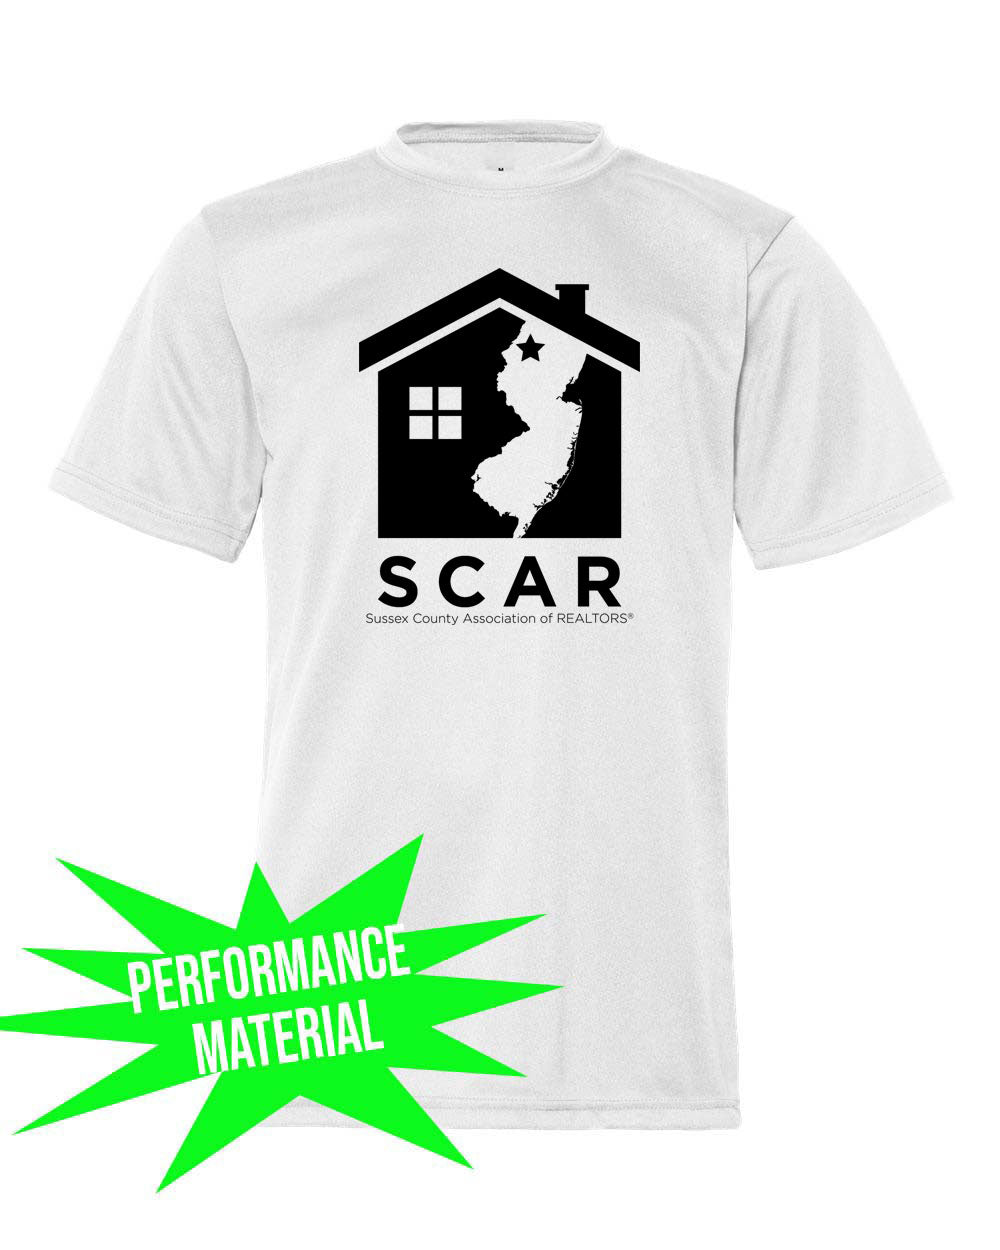 SCAR Performance material design 1 T-Shirt